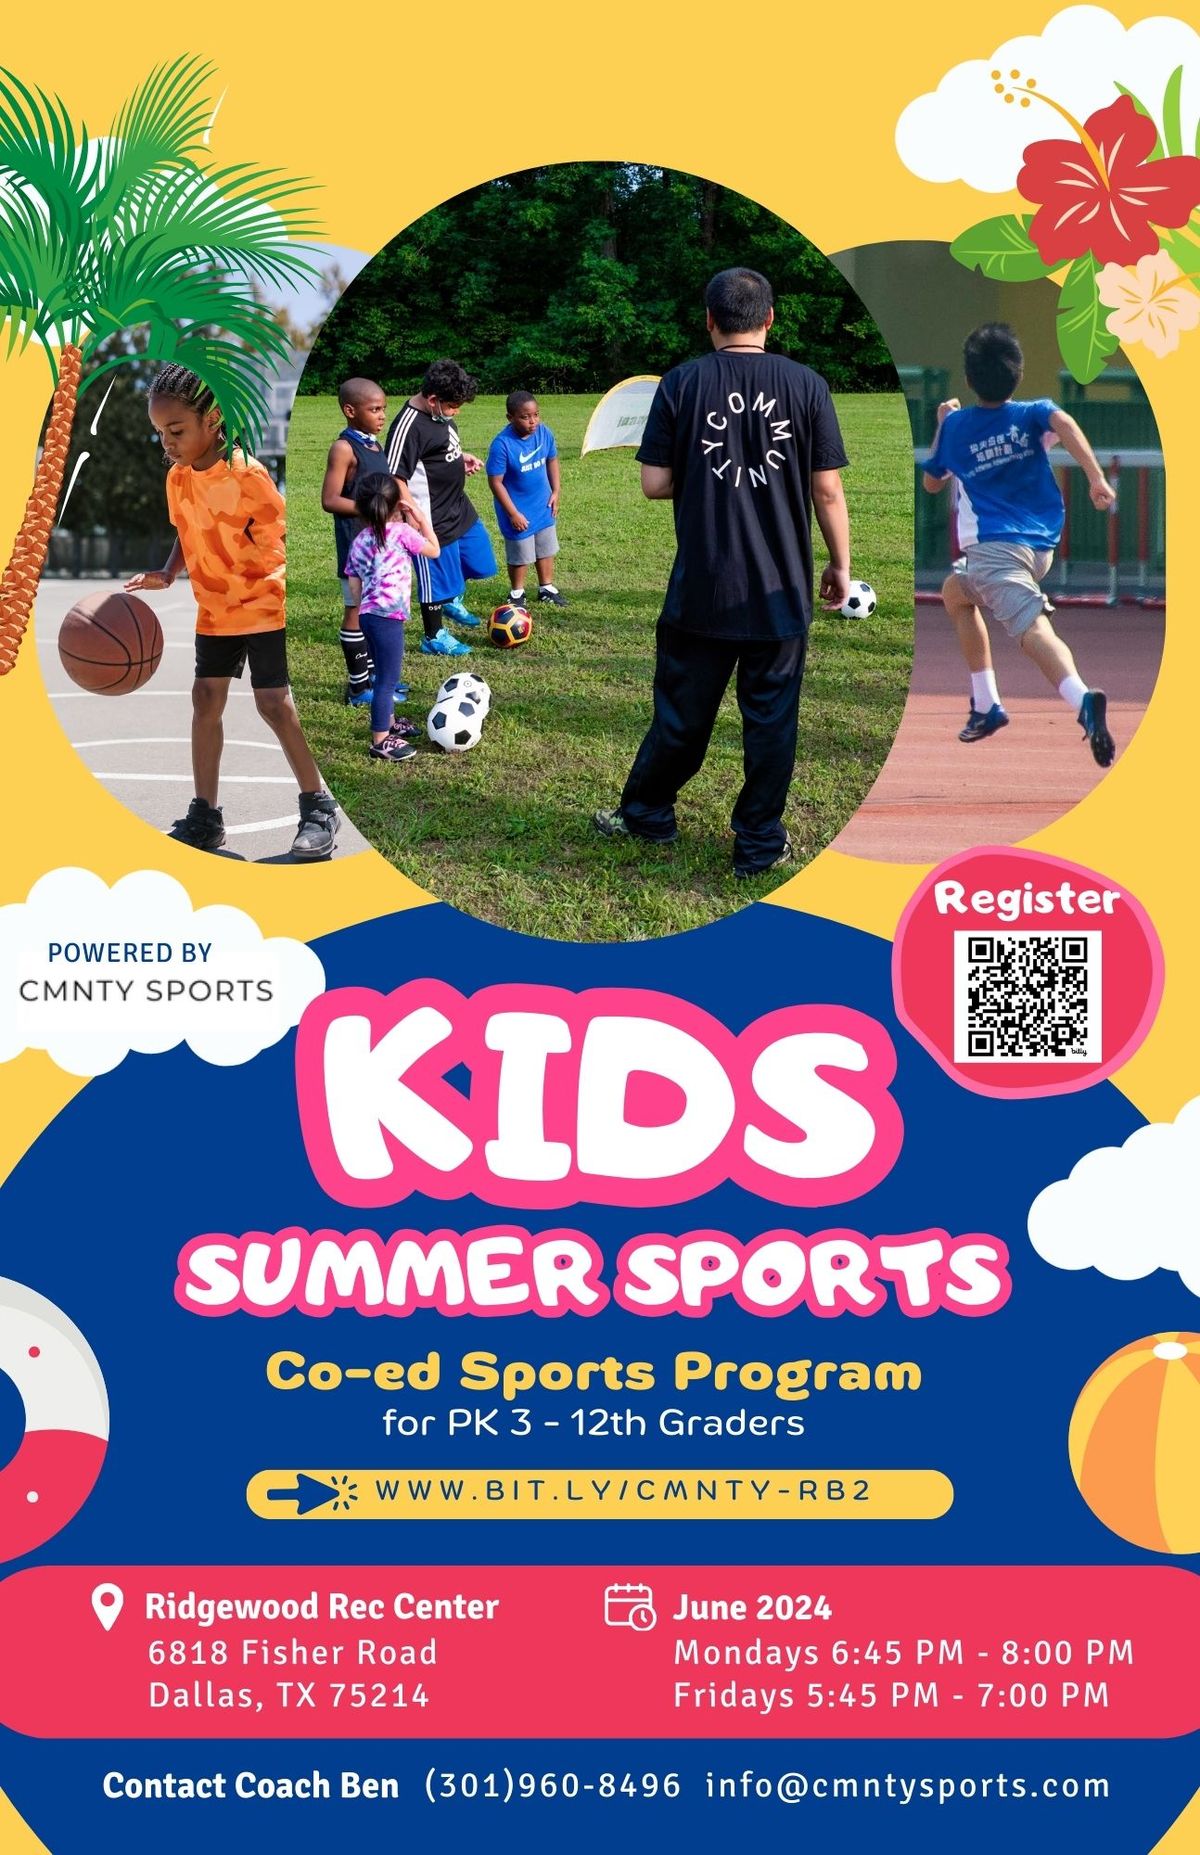 Summer Sports Program at Ridgewood Rec